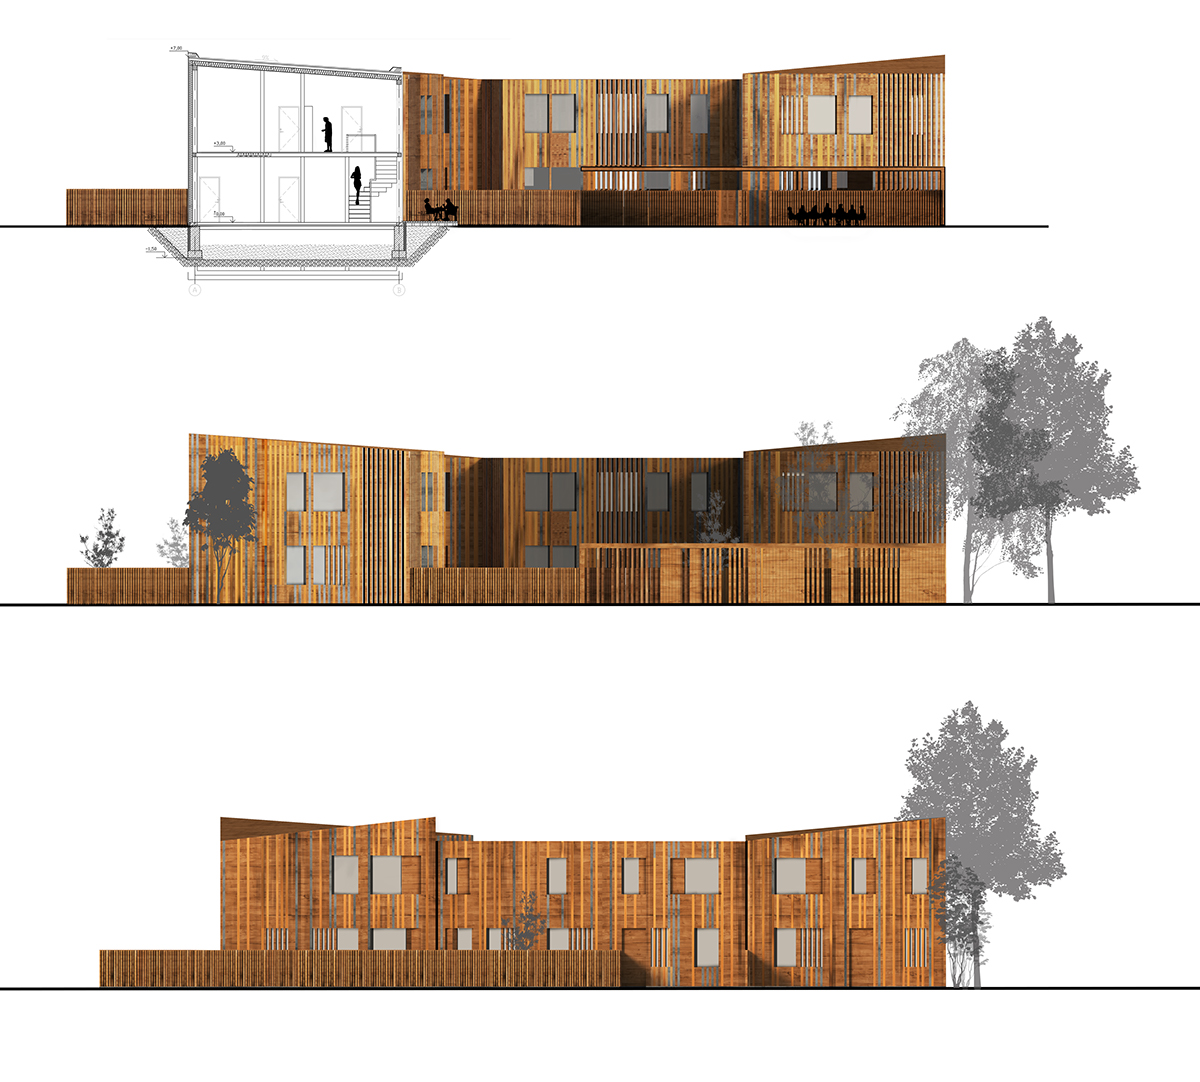 architecture house common space wooden design Project idea urban context enter to landscape green architecture